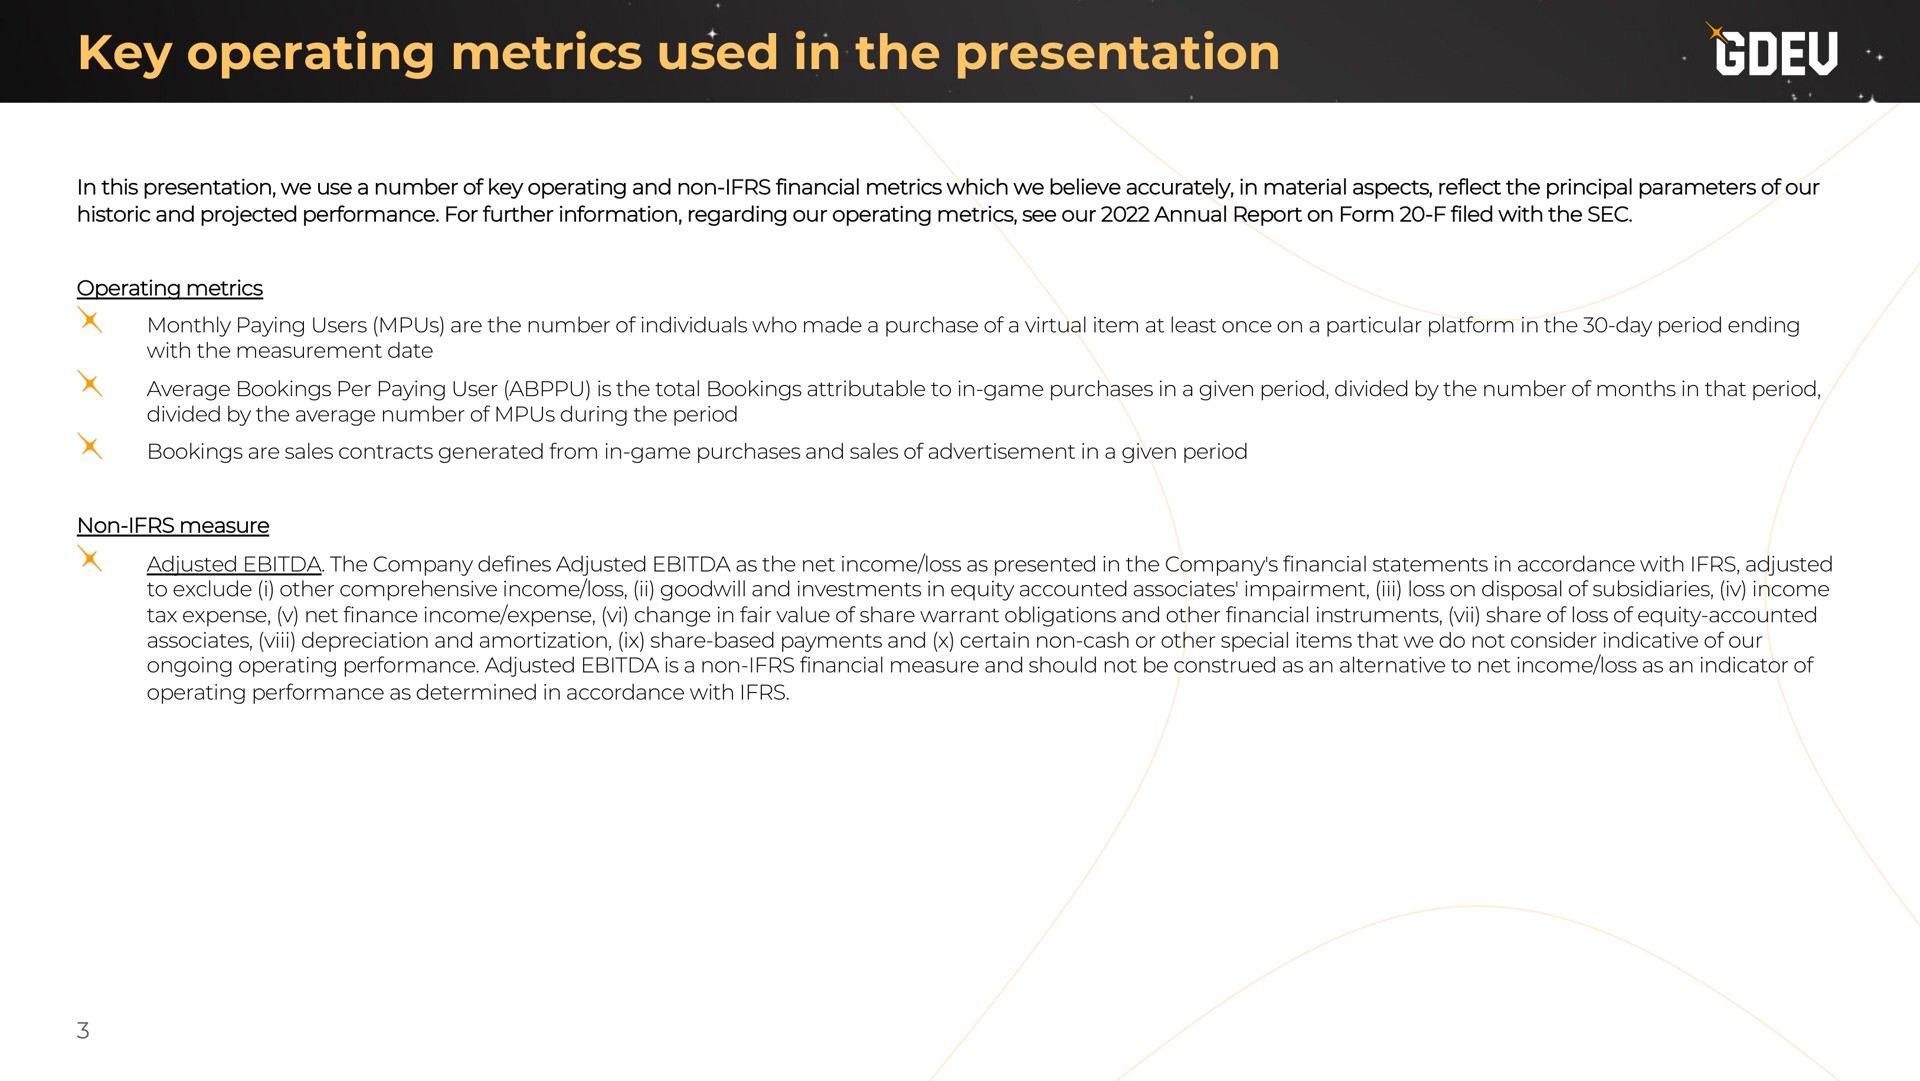 key operating metrics used in the presentation | Nexters